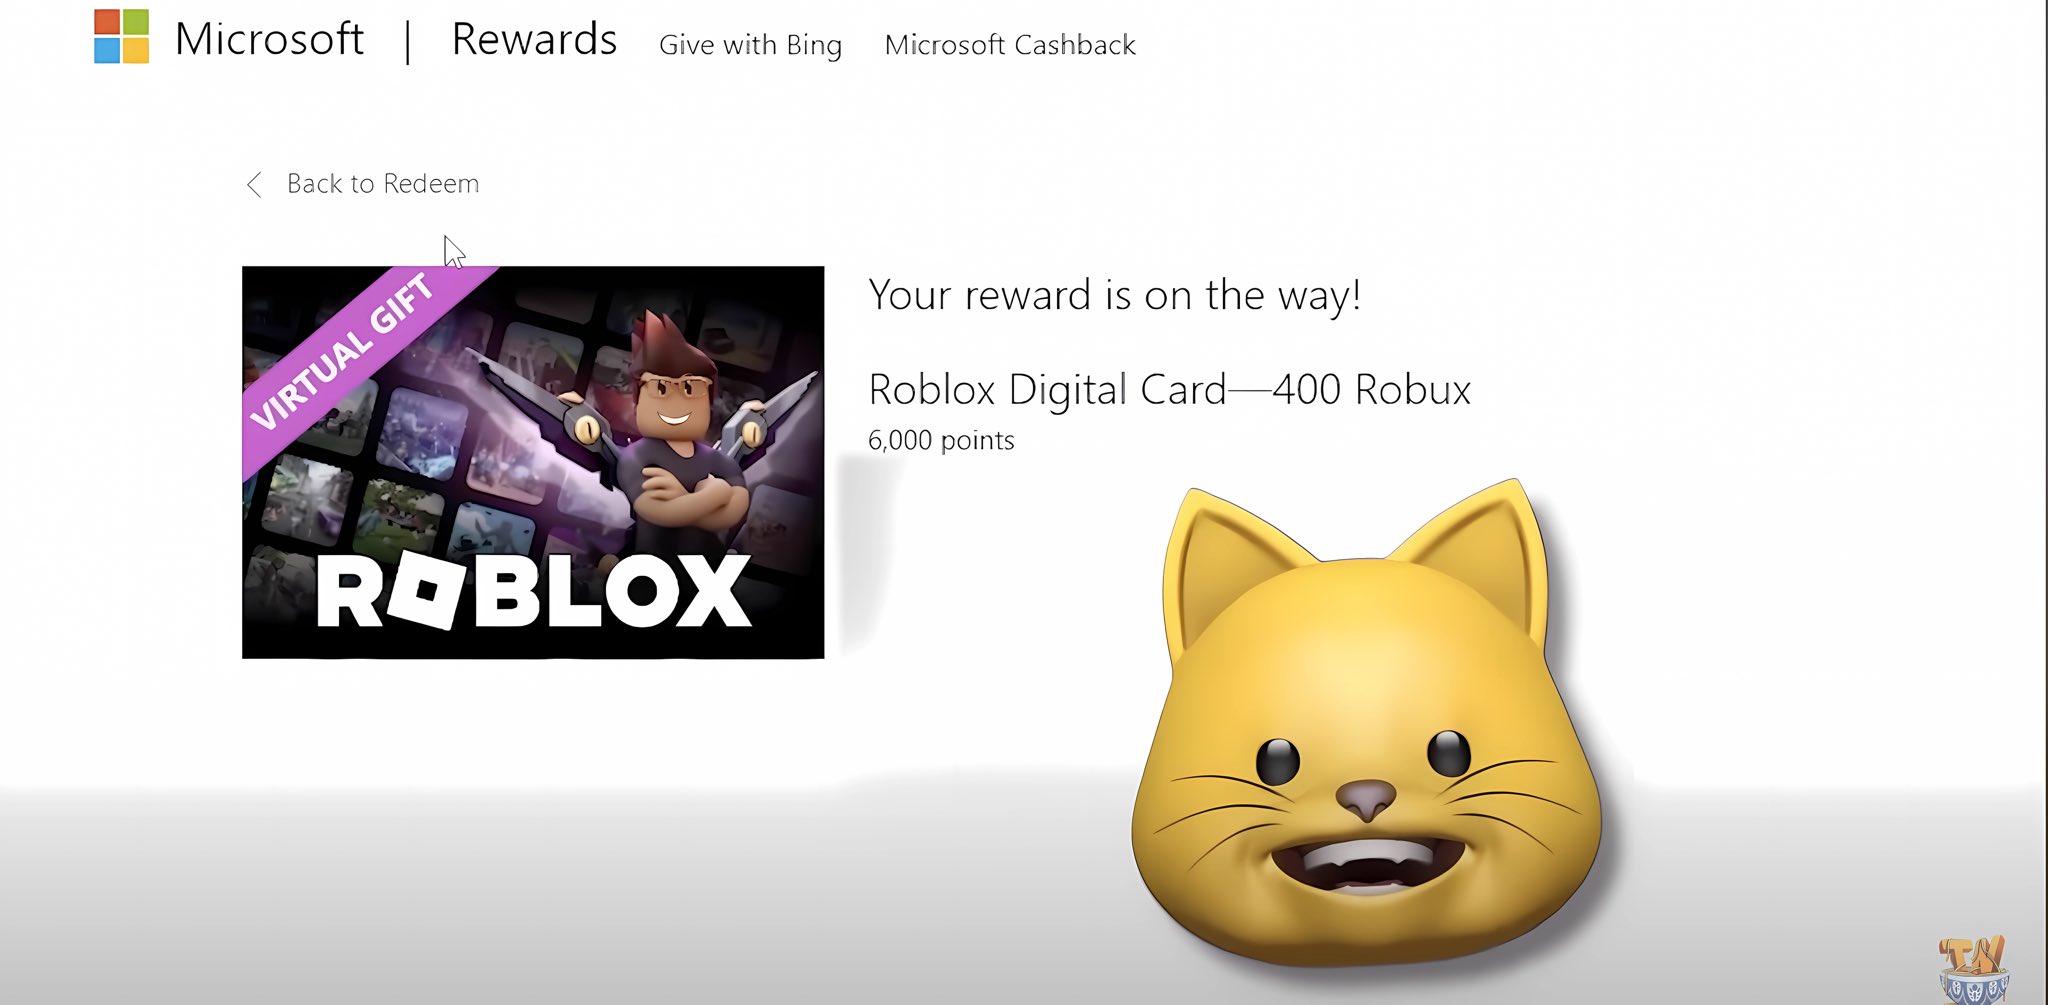 How to Get FREE Robux/Microsoft Points (Roblox Microsoft Rewards) 